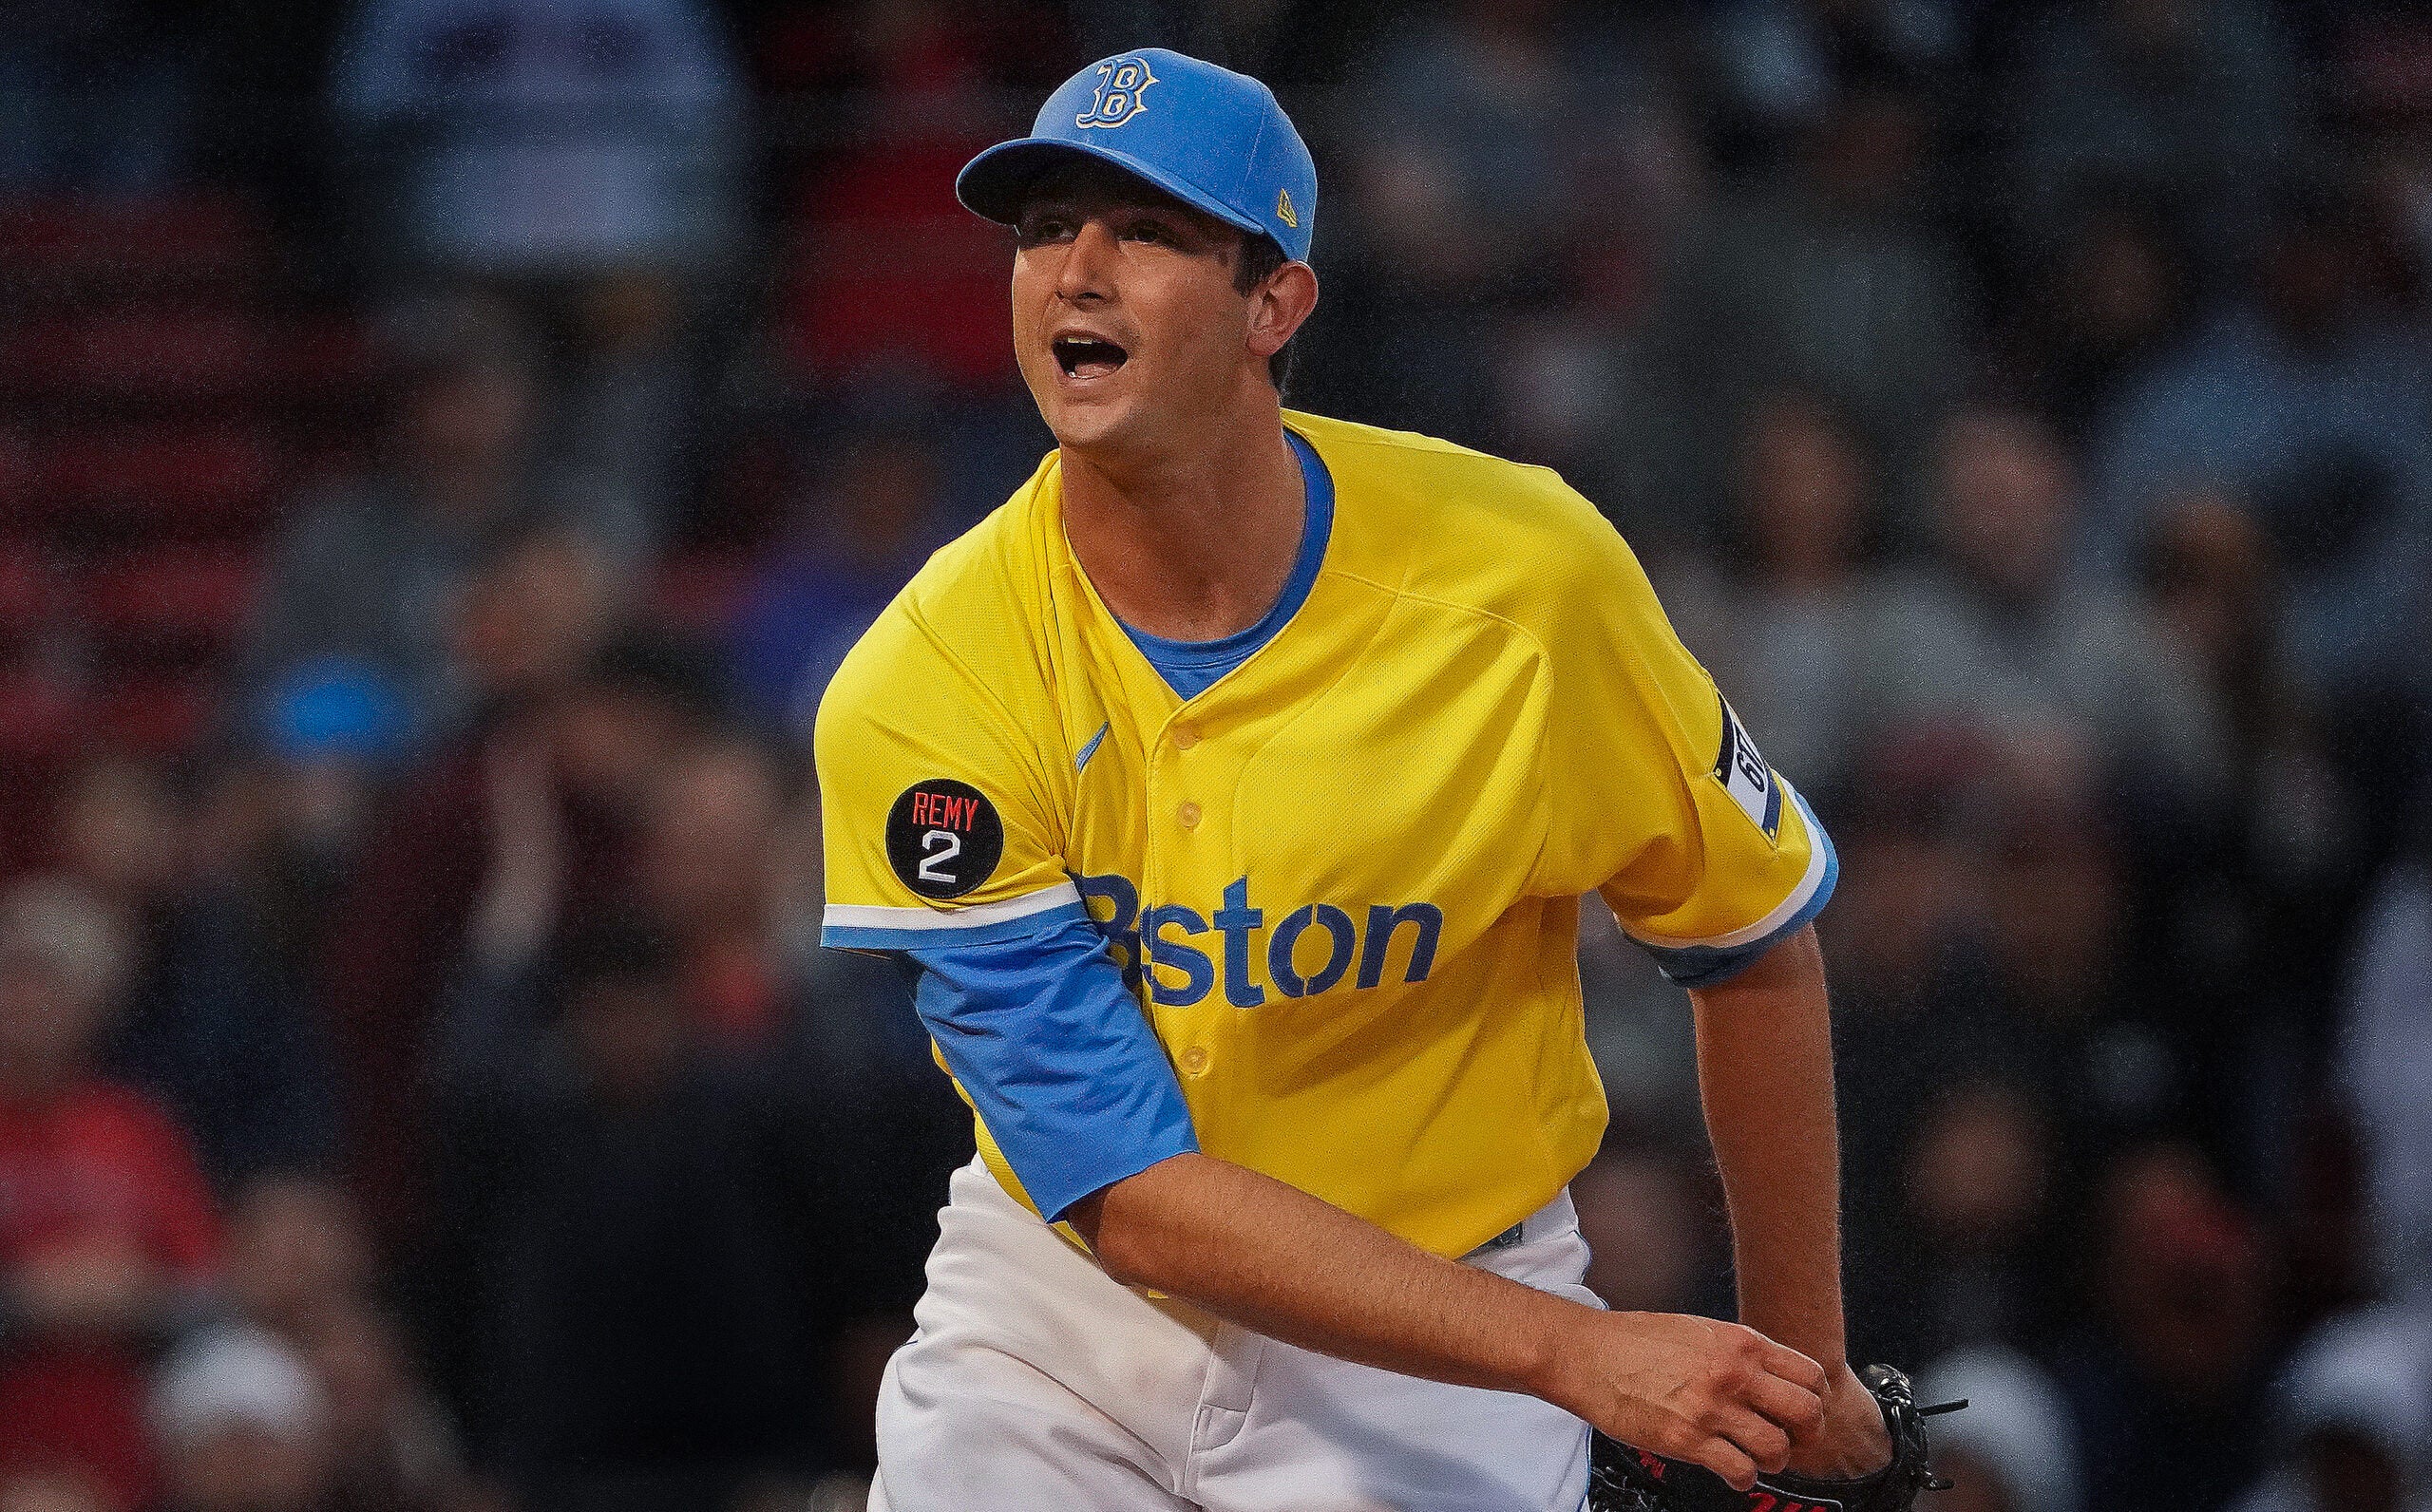 Garrett Whitlock in Red Sox yellow and blue uniform